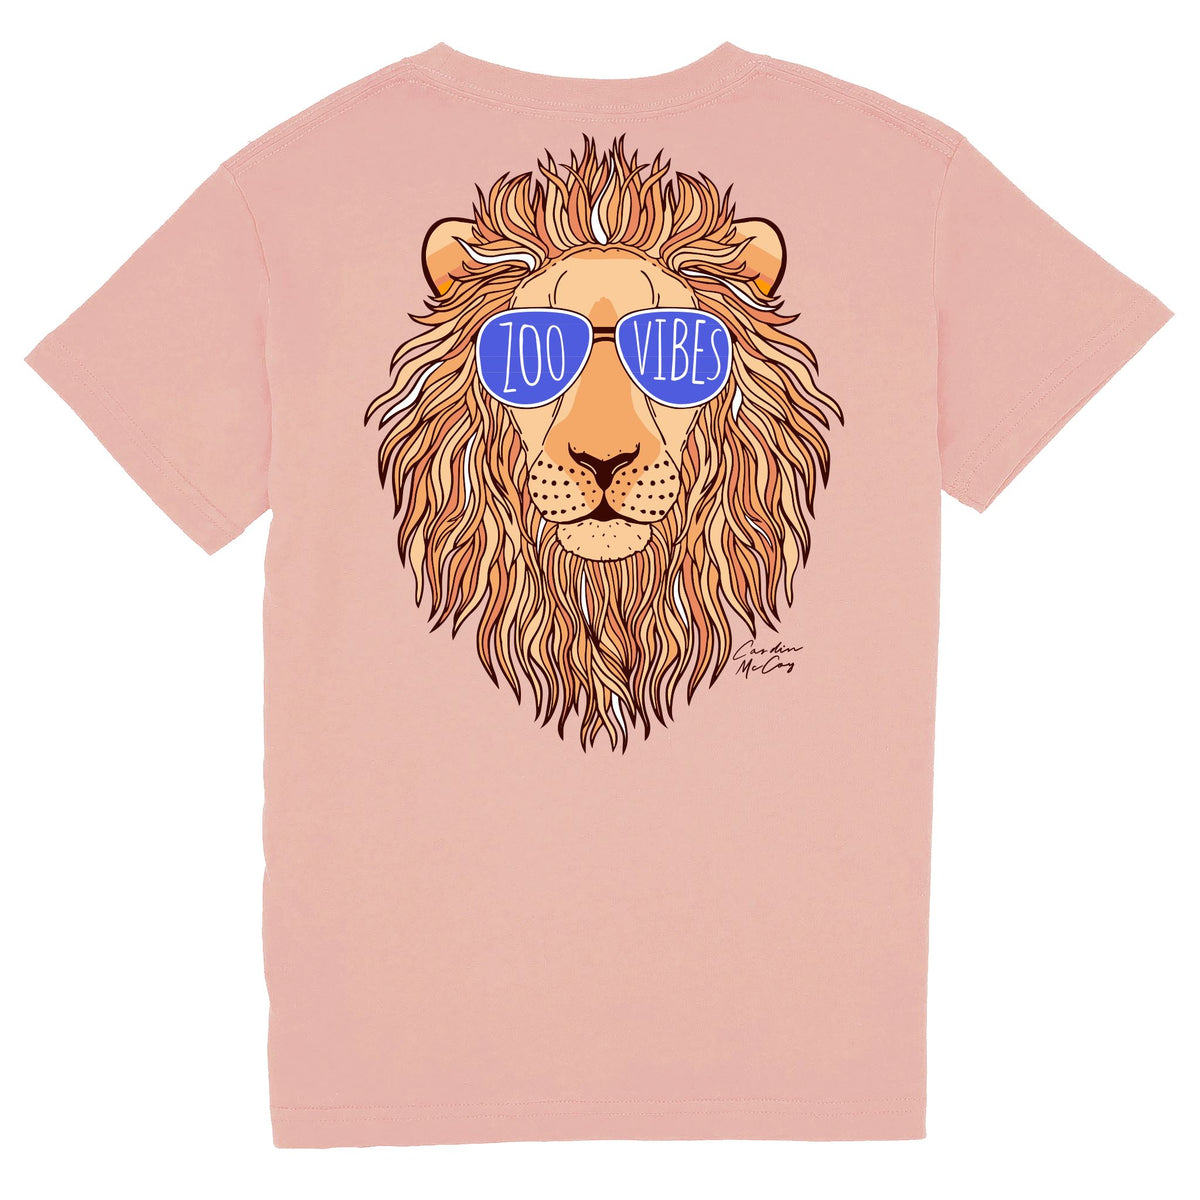 Kids' Zoo Vibes Short Sleeve Pocket Tee Short Sleeve T-Shirt Cardin McCoy Rose Tan XXS (2/3) 